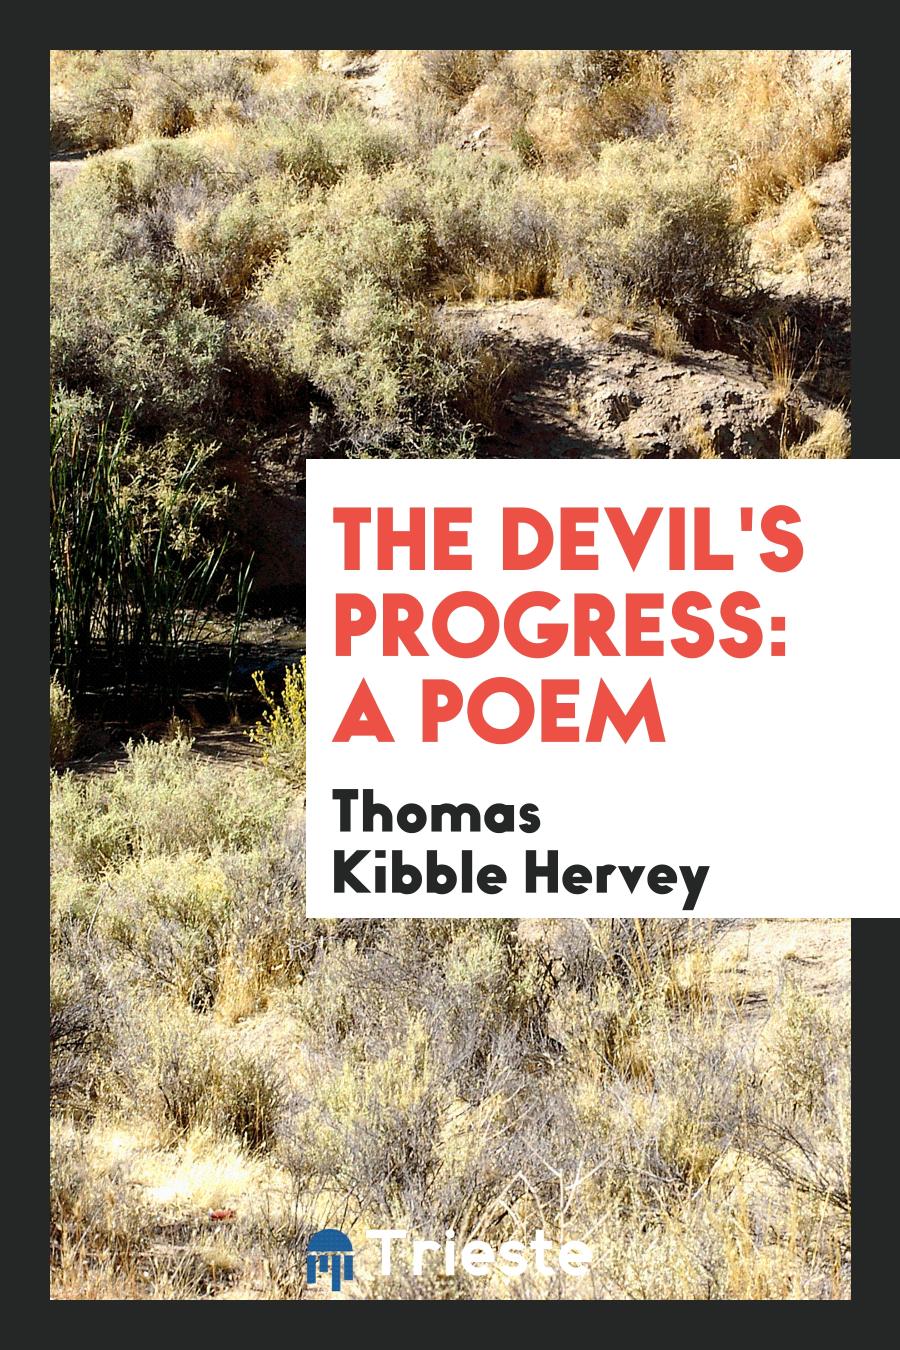 The Devil's Progress: A Poem